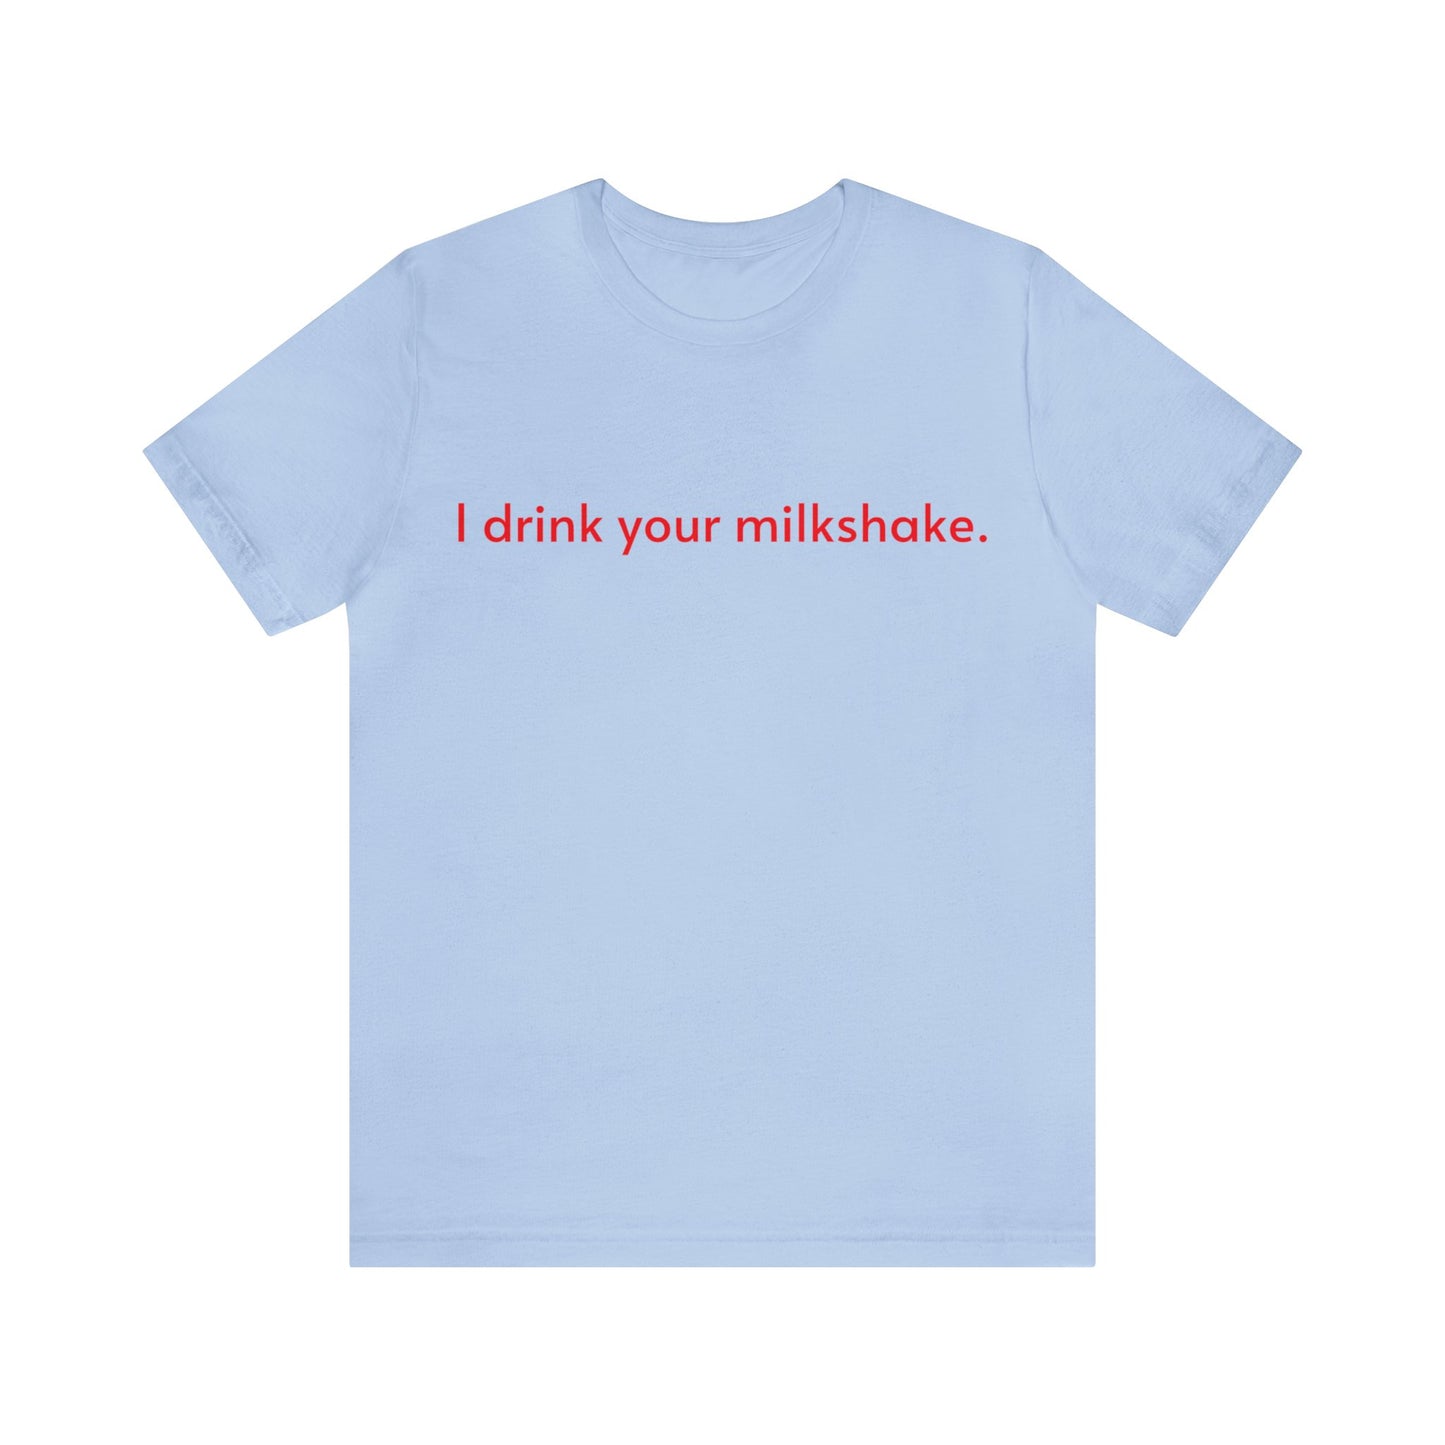 I drink your milkshake